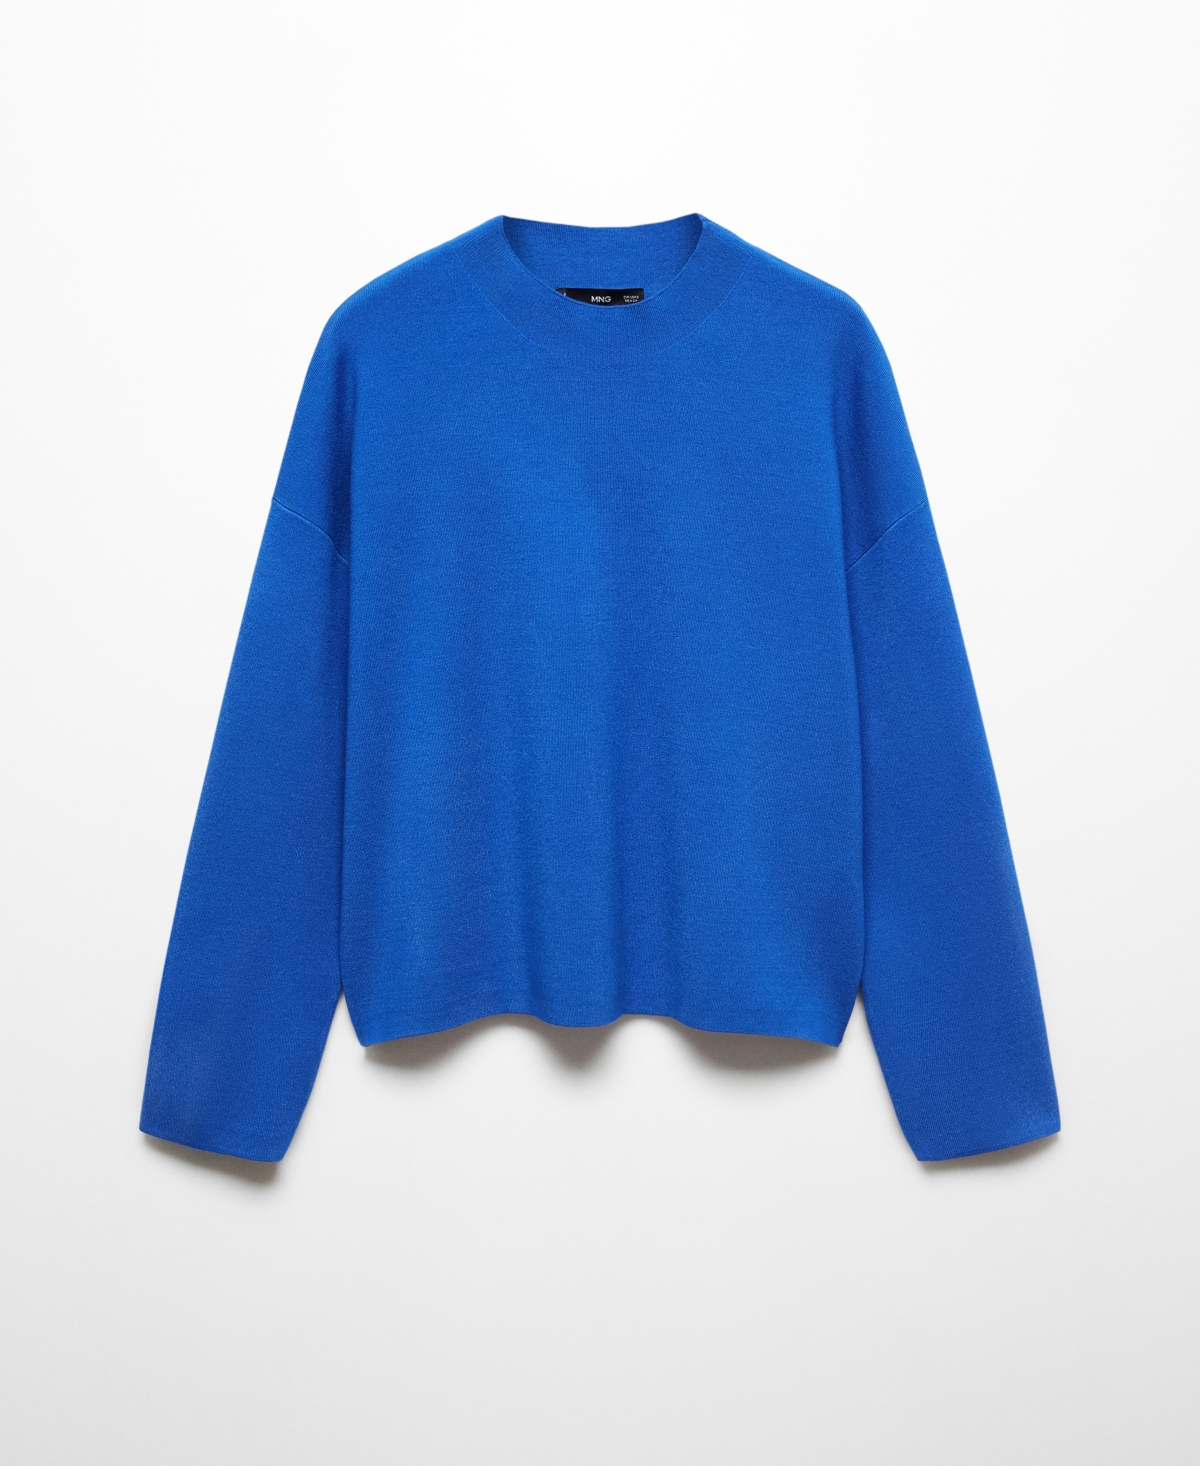 Mango Perkins Neck Knitted Sweater Blue